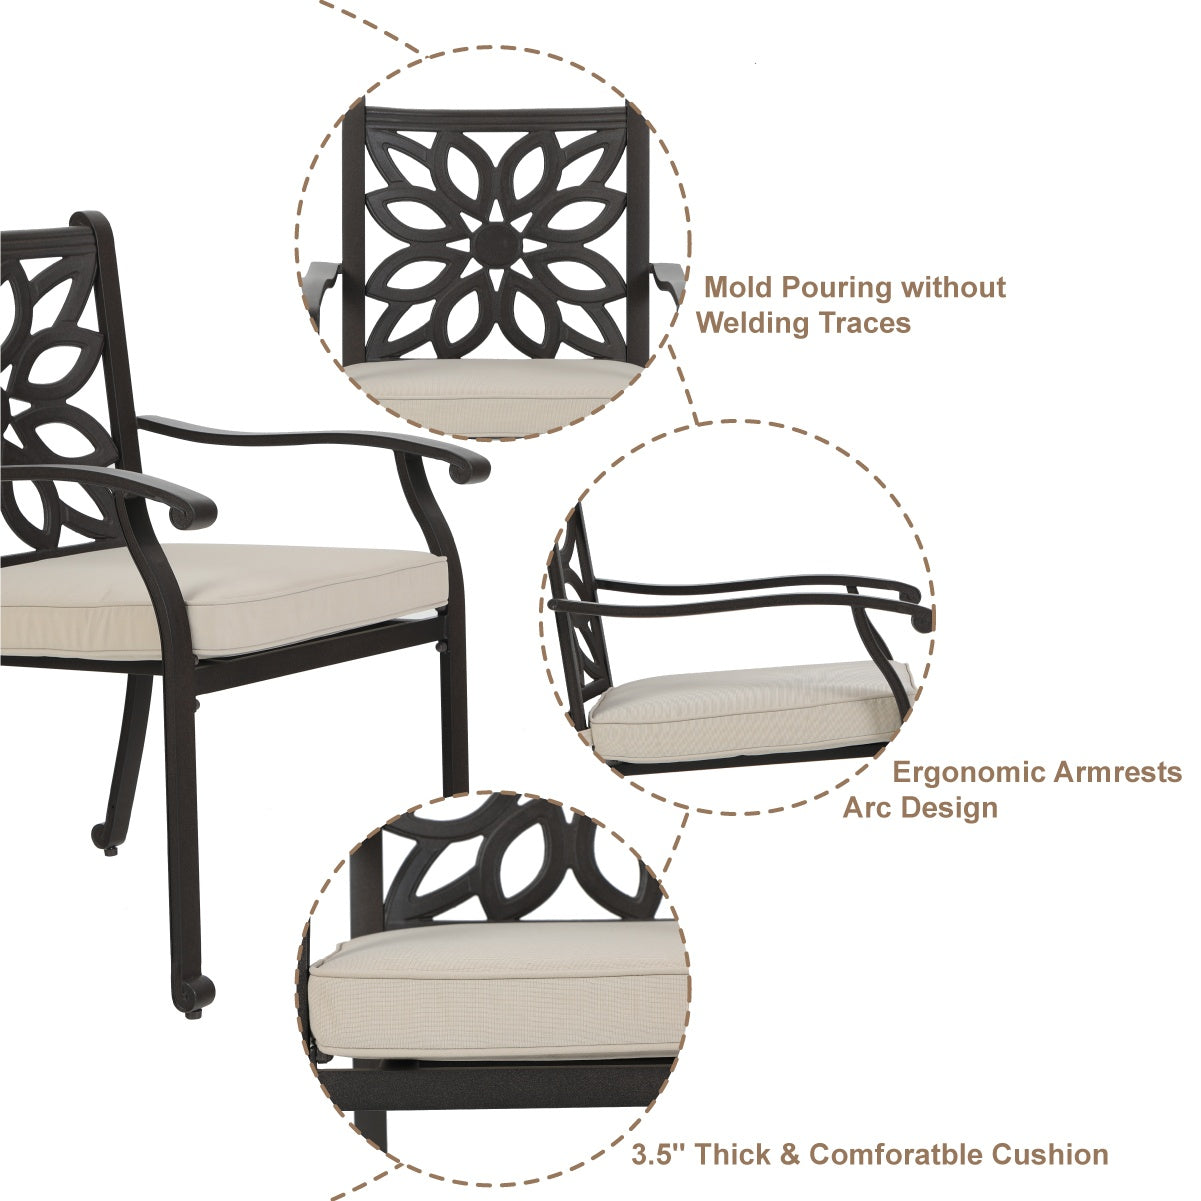 Sophia & William 7 Piece Cast Aluminum Outdoor Patio Dining Set 6 Chairs and Rectangular Table